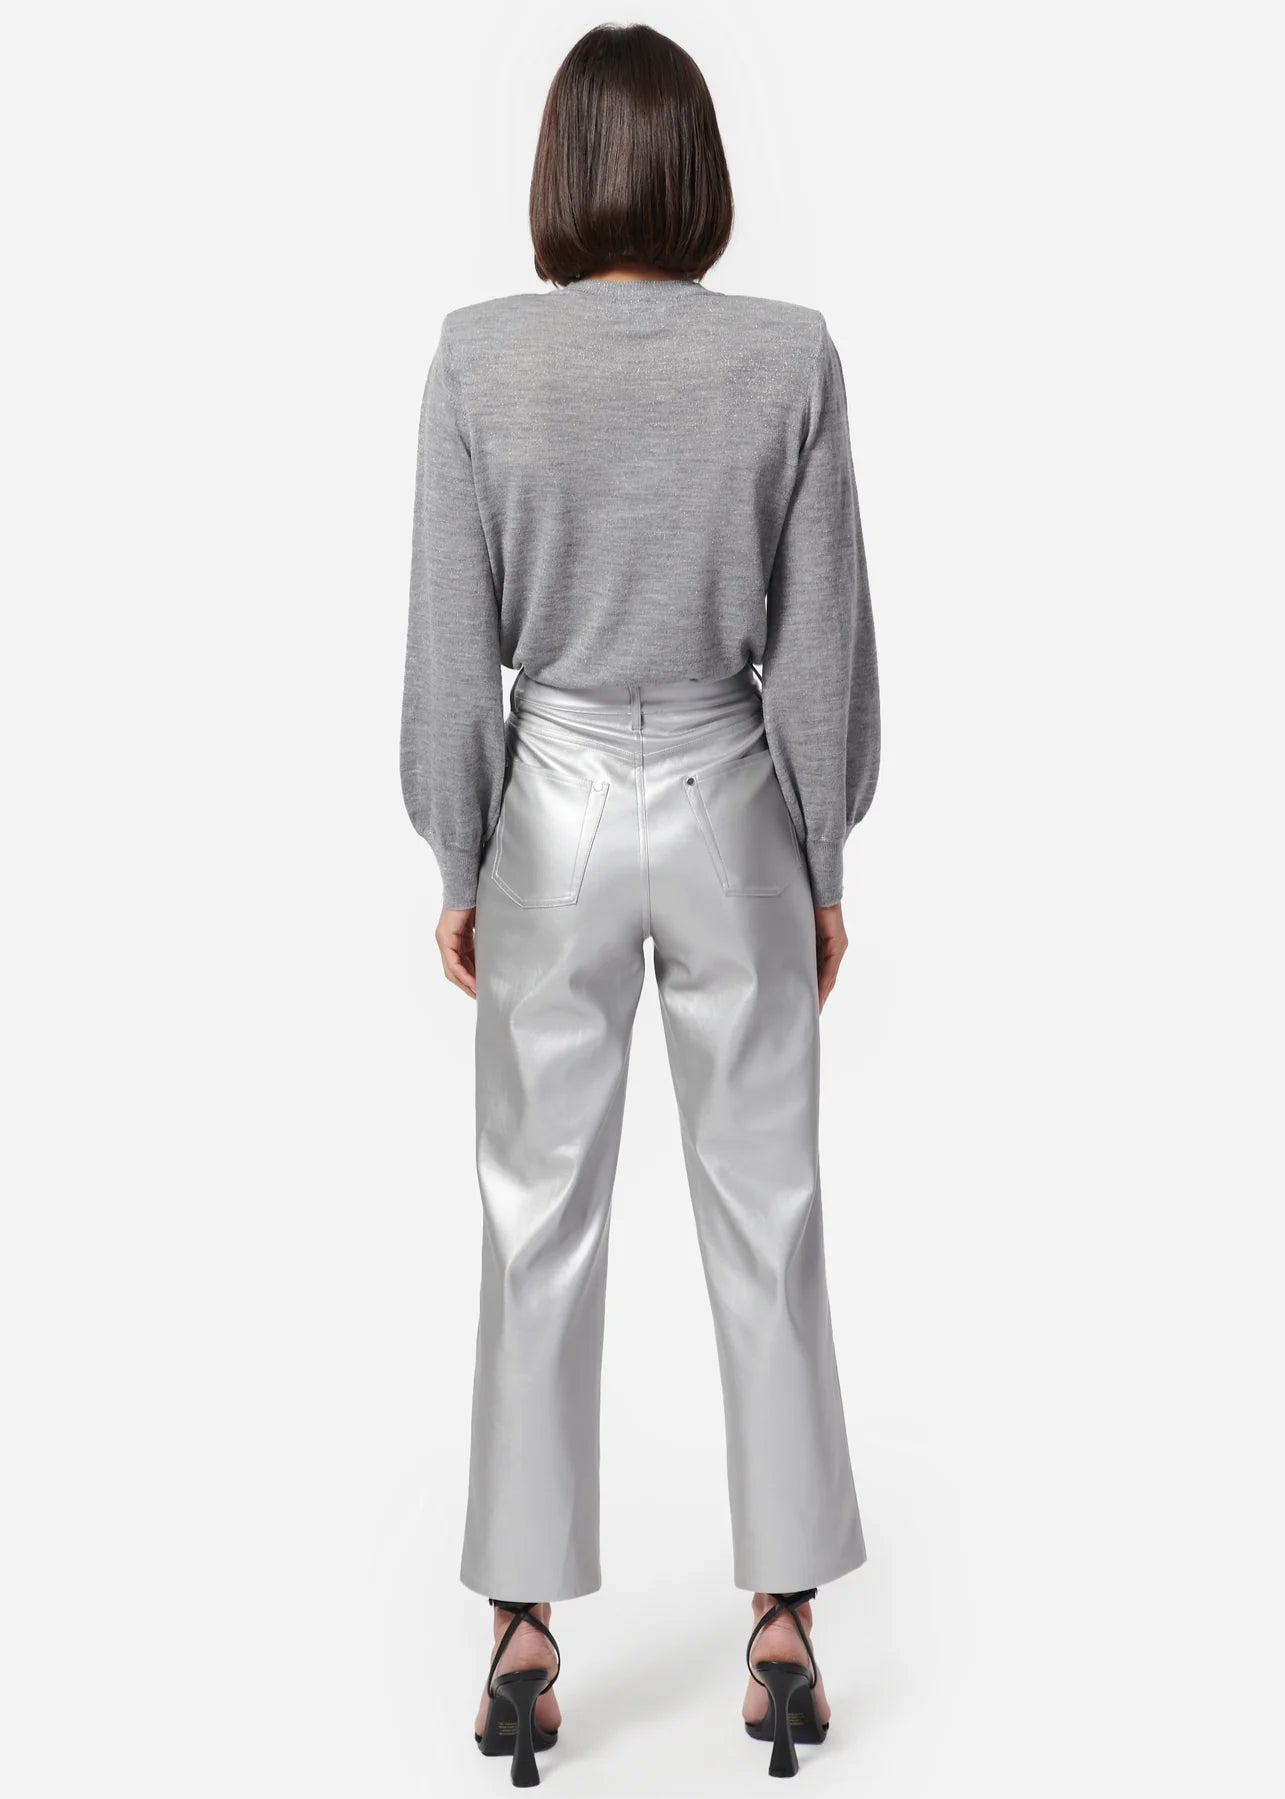 Cami Hanie Vegan Leather Pant in Silver - Estilo Boutique